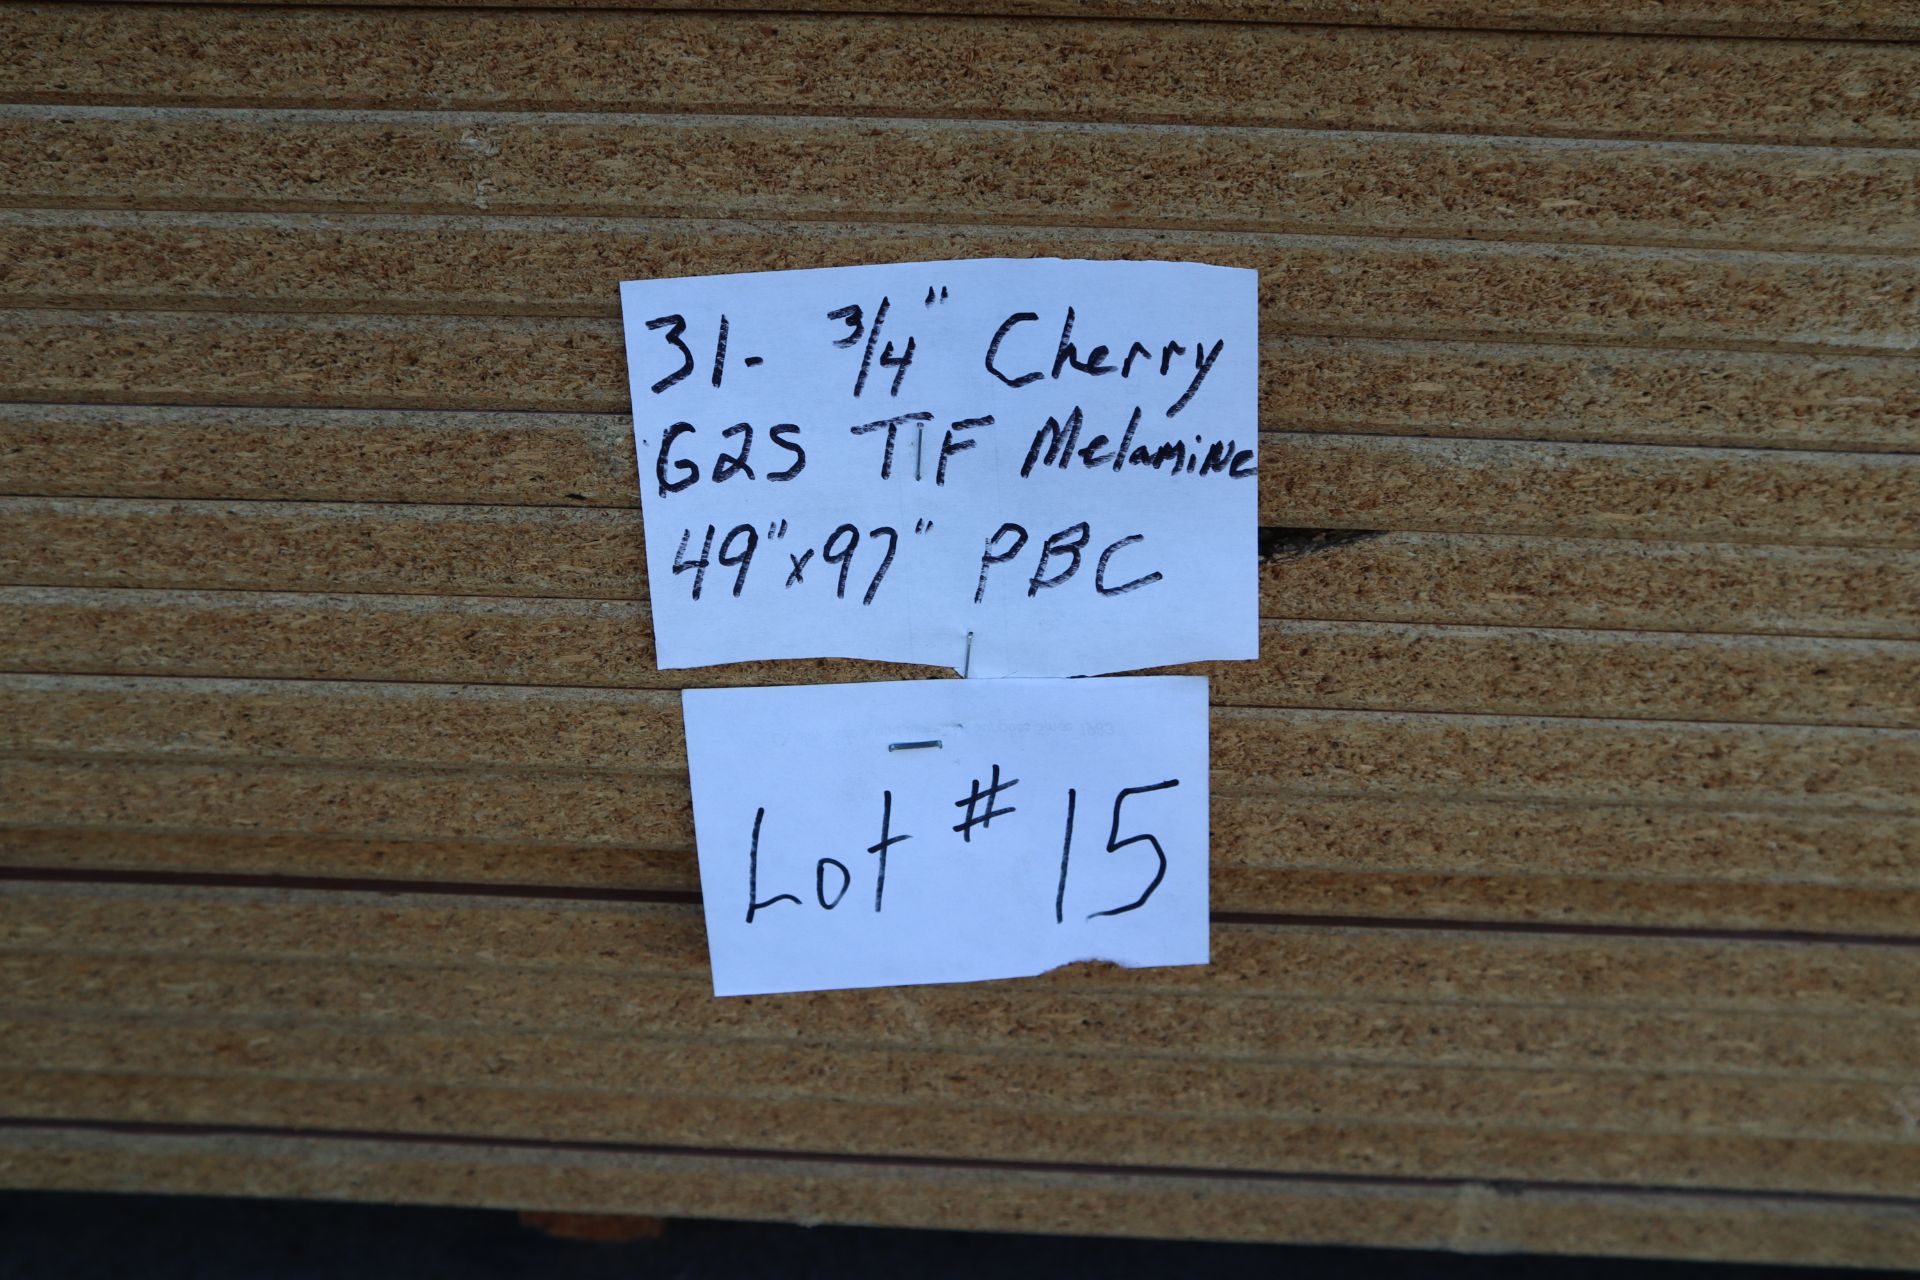 31-Sheets 3/4" Cherry G2S TF Melamine, 49"x97"PBC - Image 5 of 6